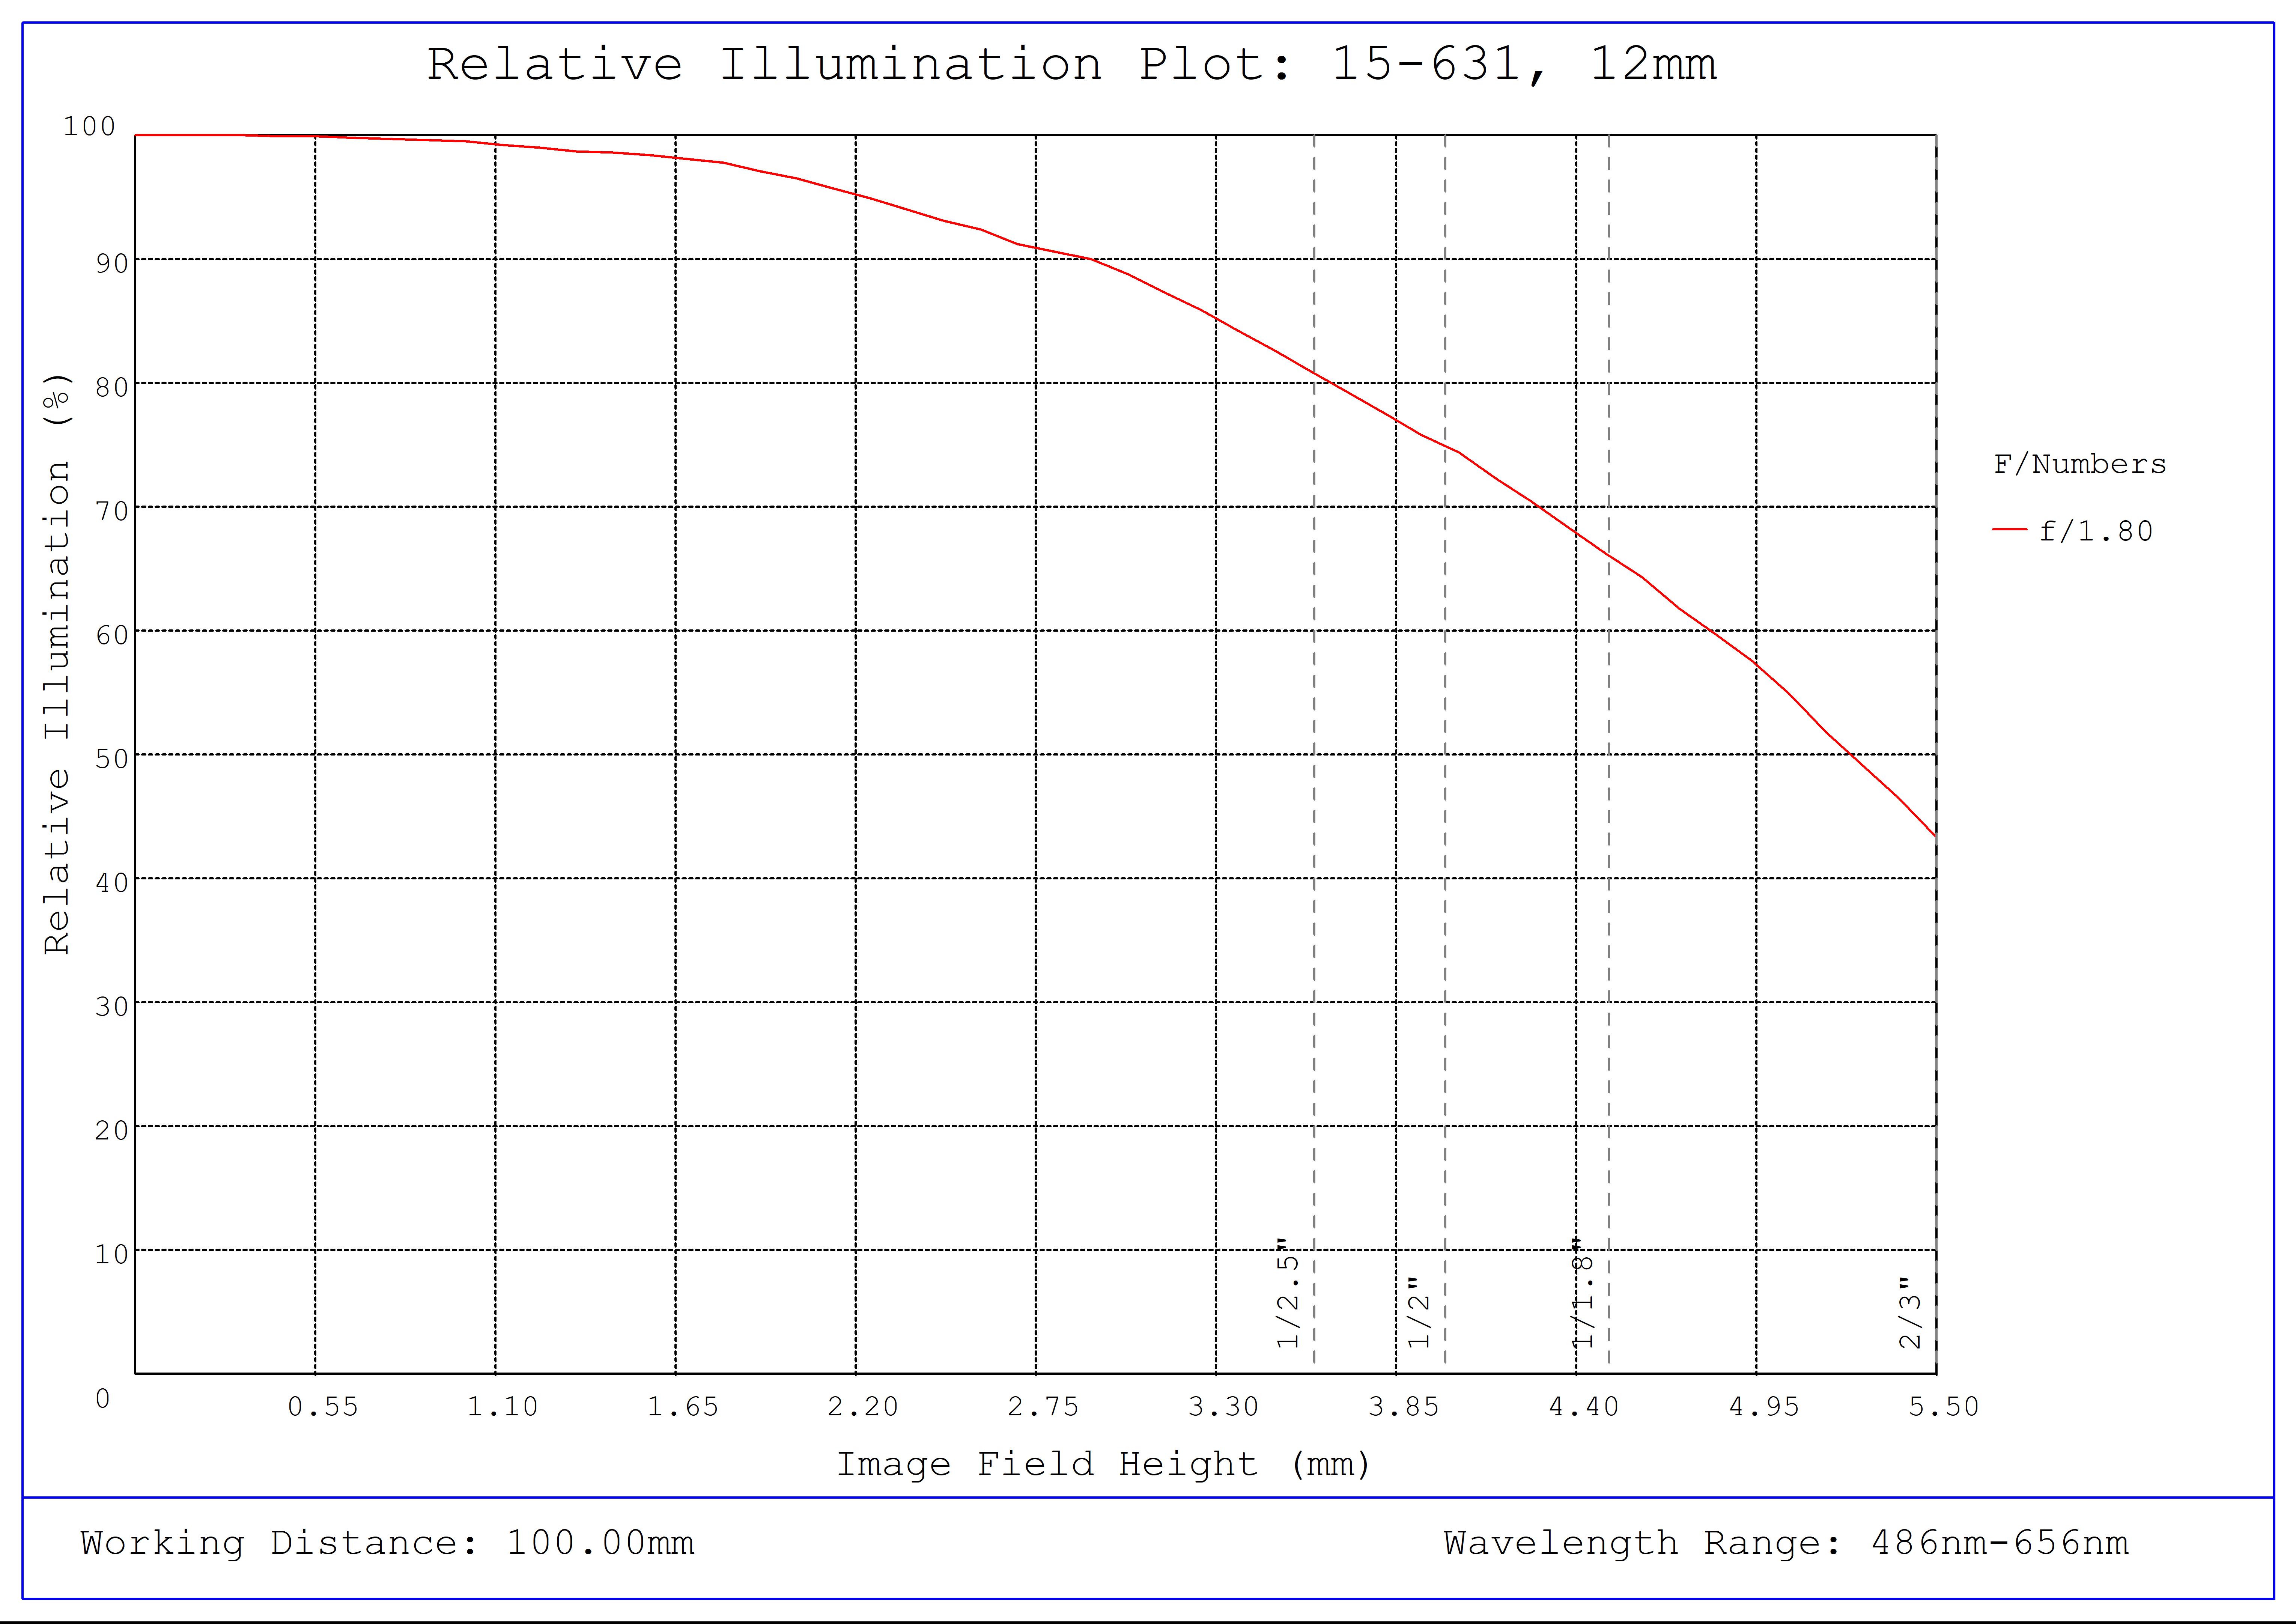 #15-631, 12mm, f/1.8 Cw Series Fixed Focal Length Lens, Relative Illumination Plot